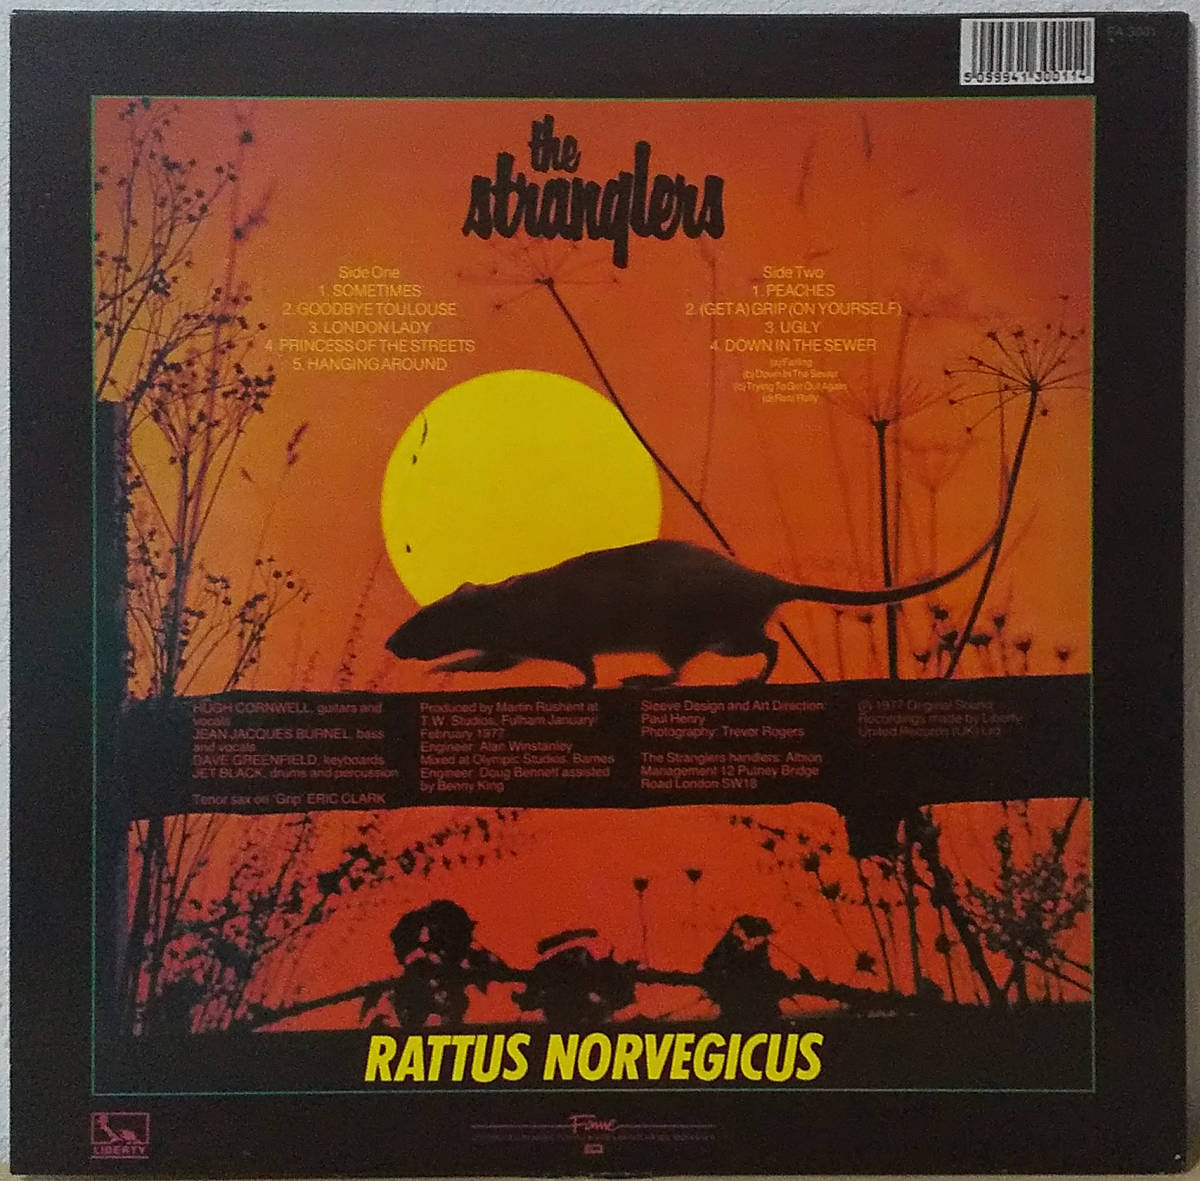 The Stranglers - Stranglers IV (Rattus Norvegicus) UK盤 LP Fame/Liberty - FA 3001 ストラングラーズ 1991年_画像2